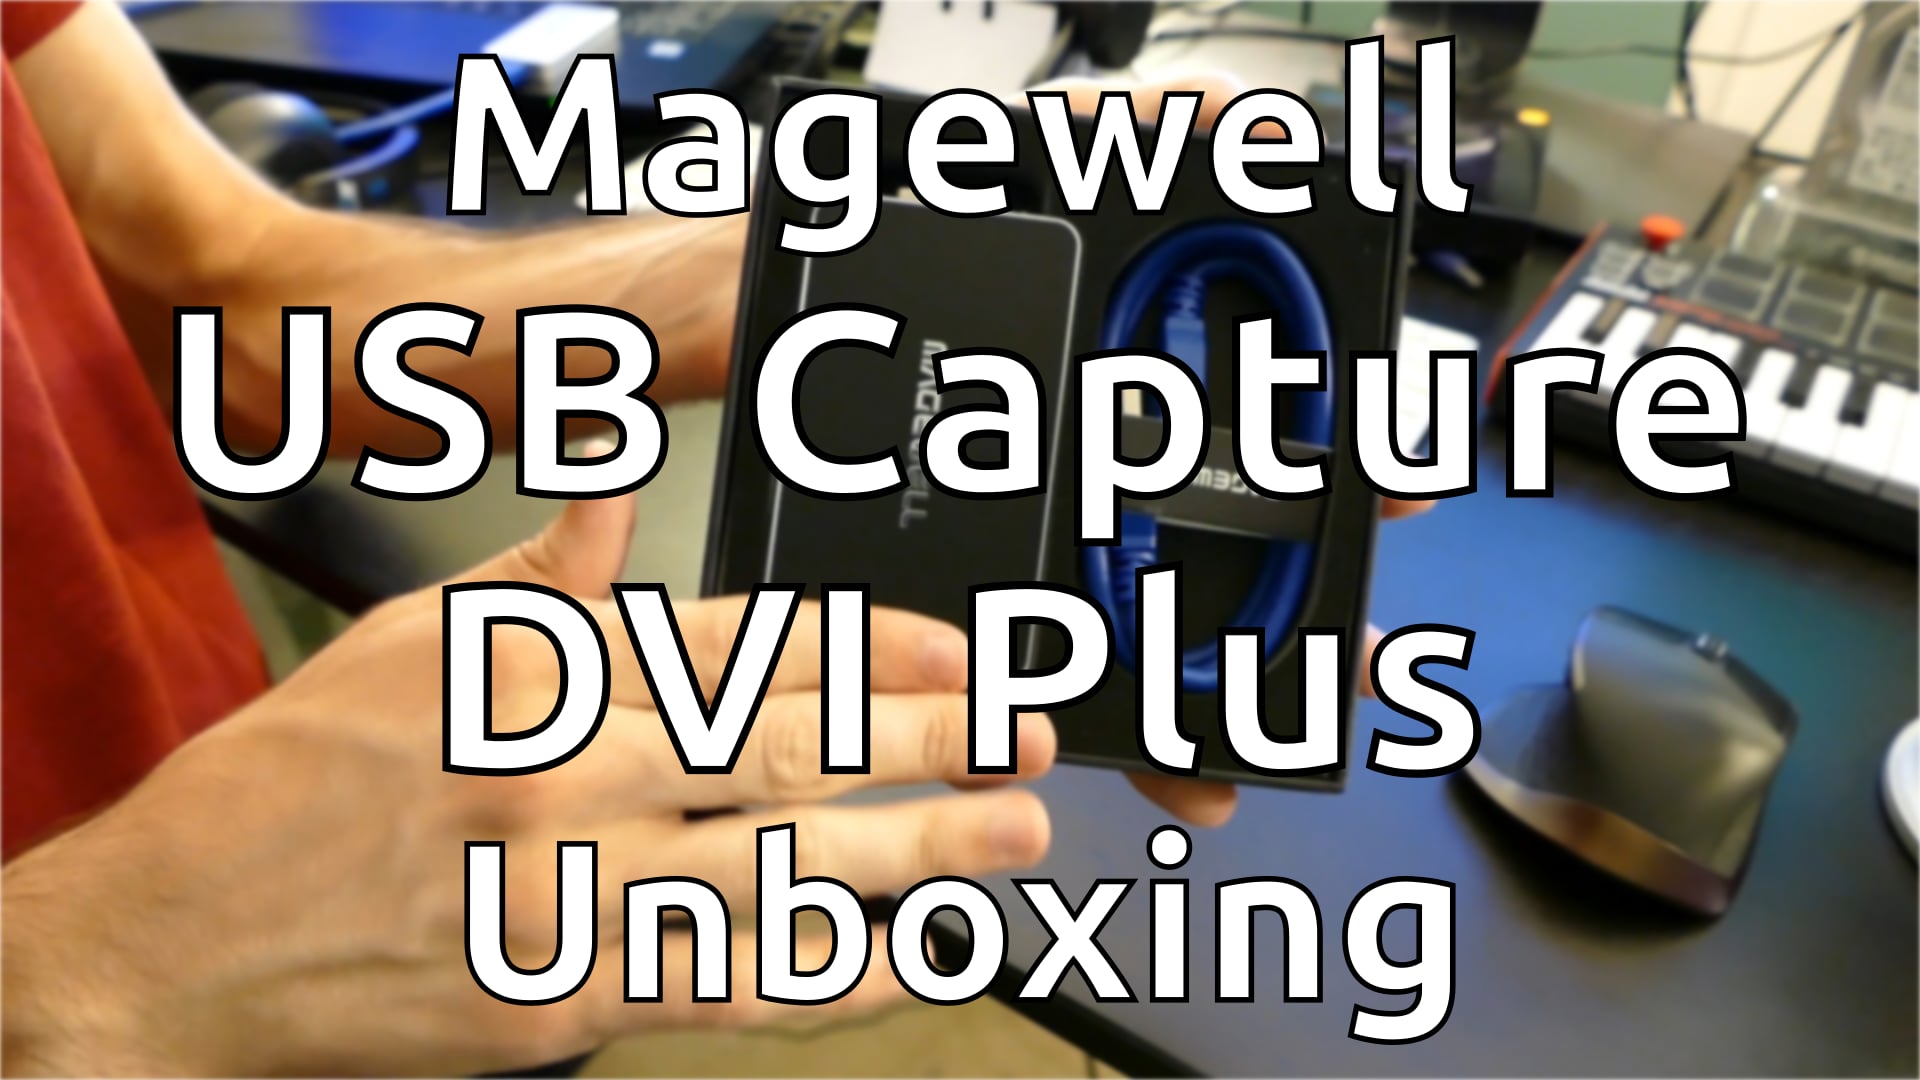 Magewell USB Capture DVI Plus Unboxing